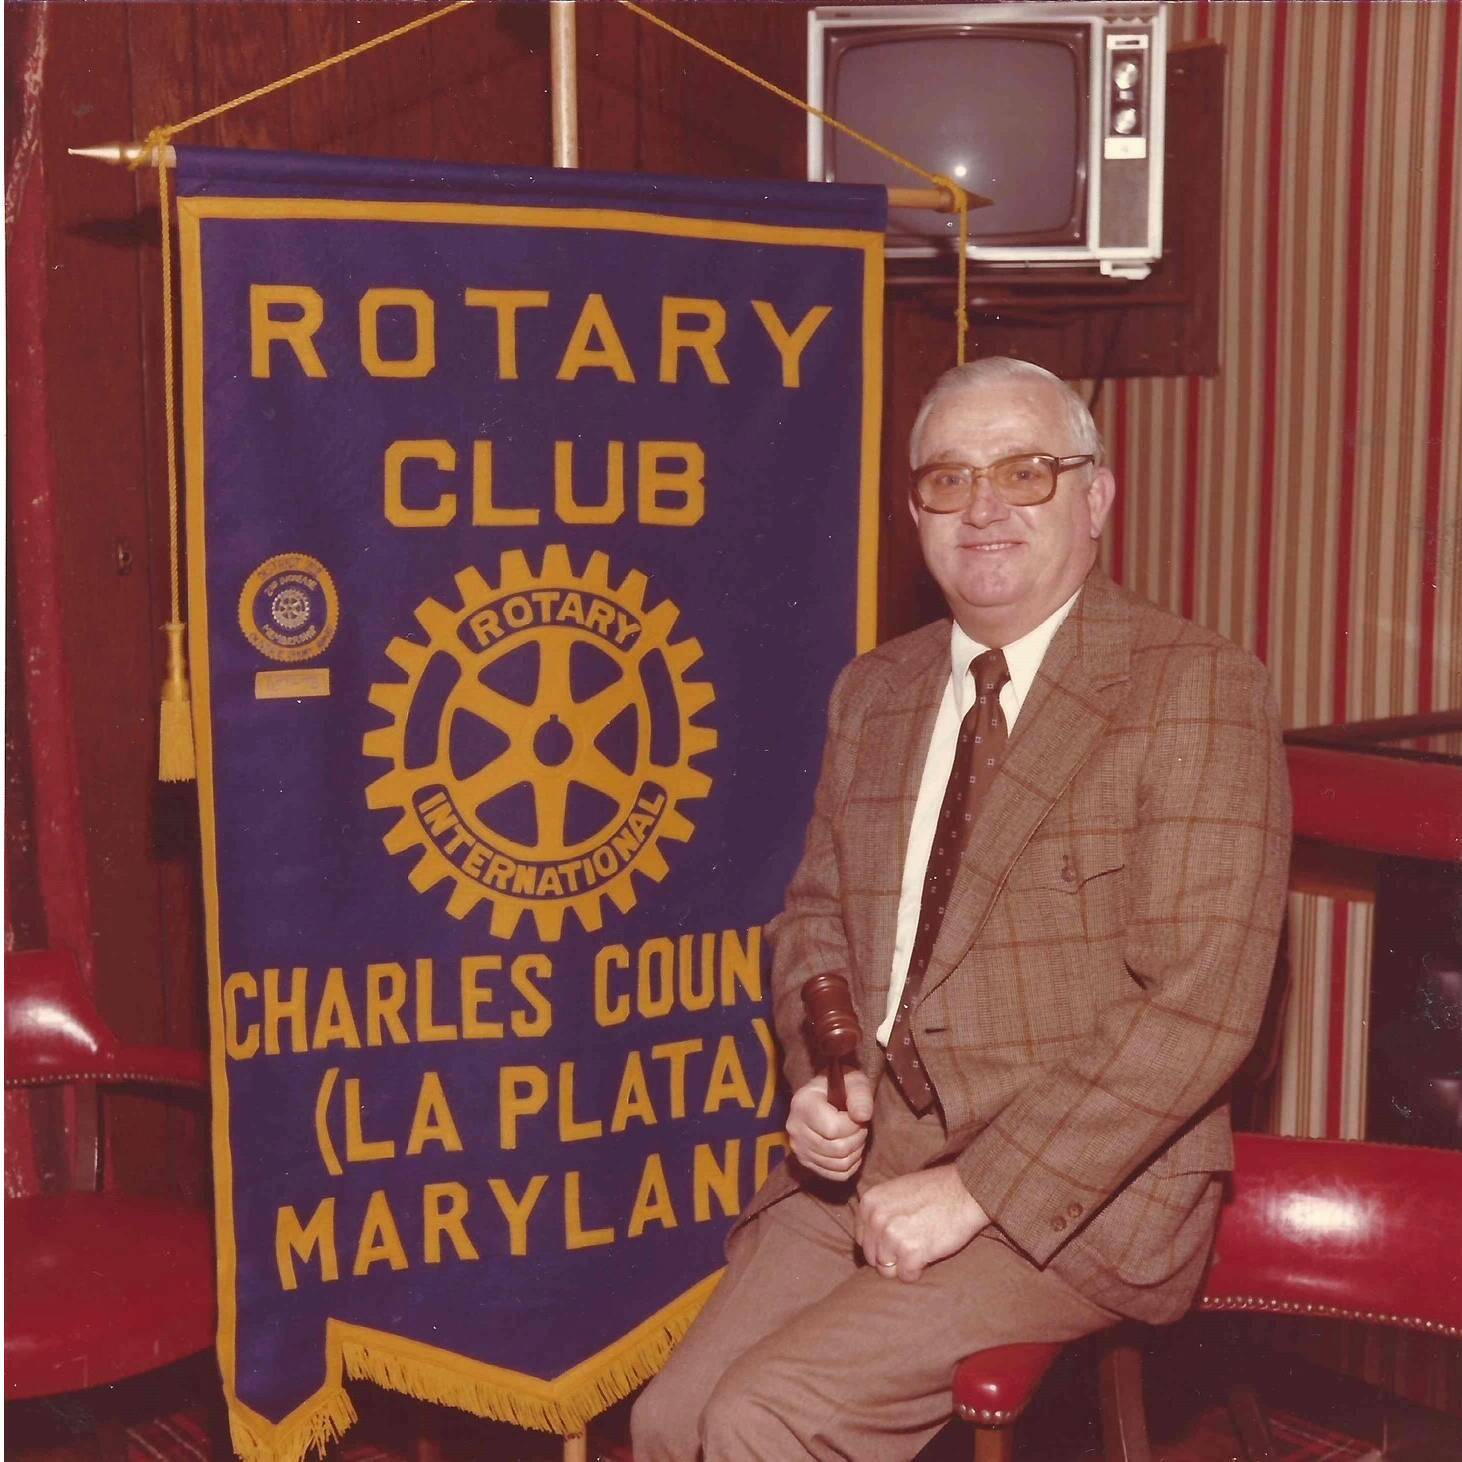 Rotary Club of Charles County (La Plata)